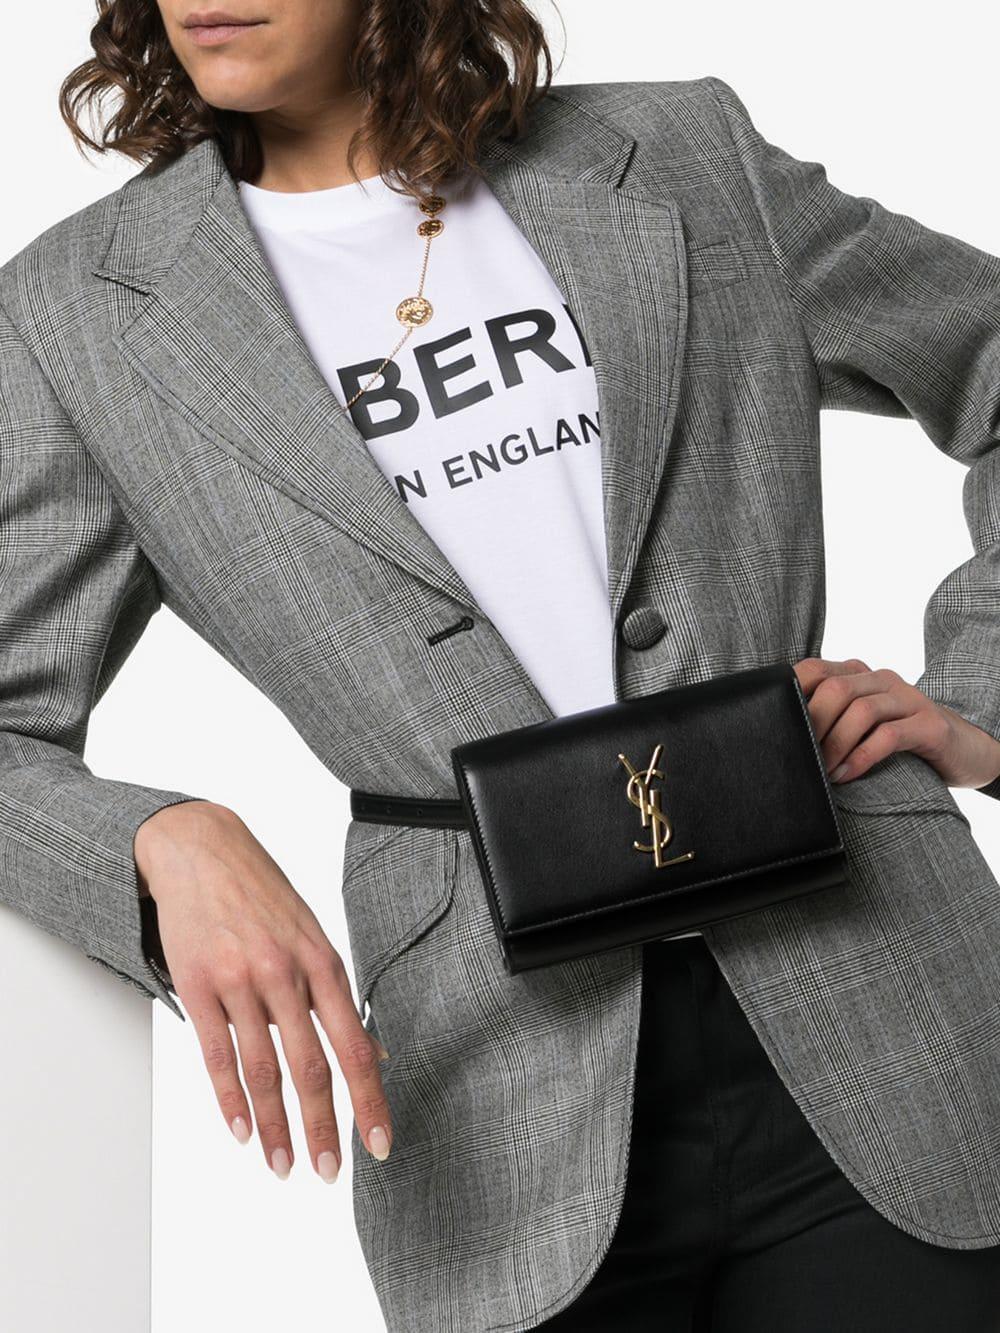 Saint Laurent Black Mini Ysl Leather Belt Bag